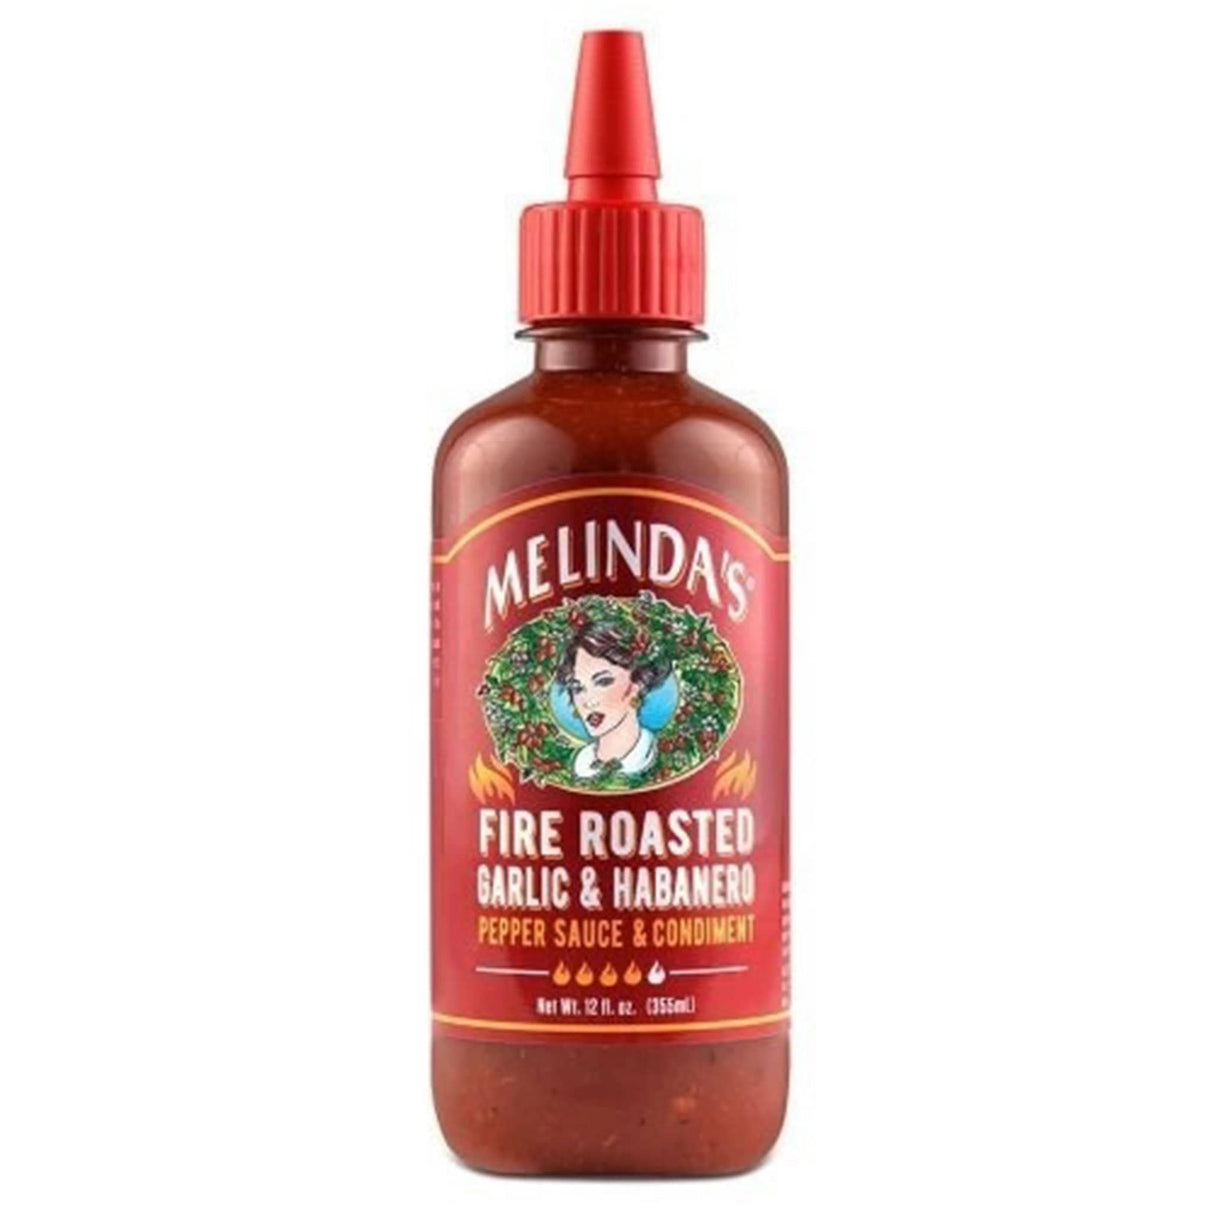 Melinda's Fire Roasted Garlic & Habañero Pepper Sauce